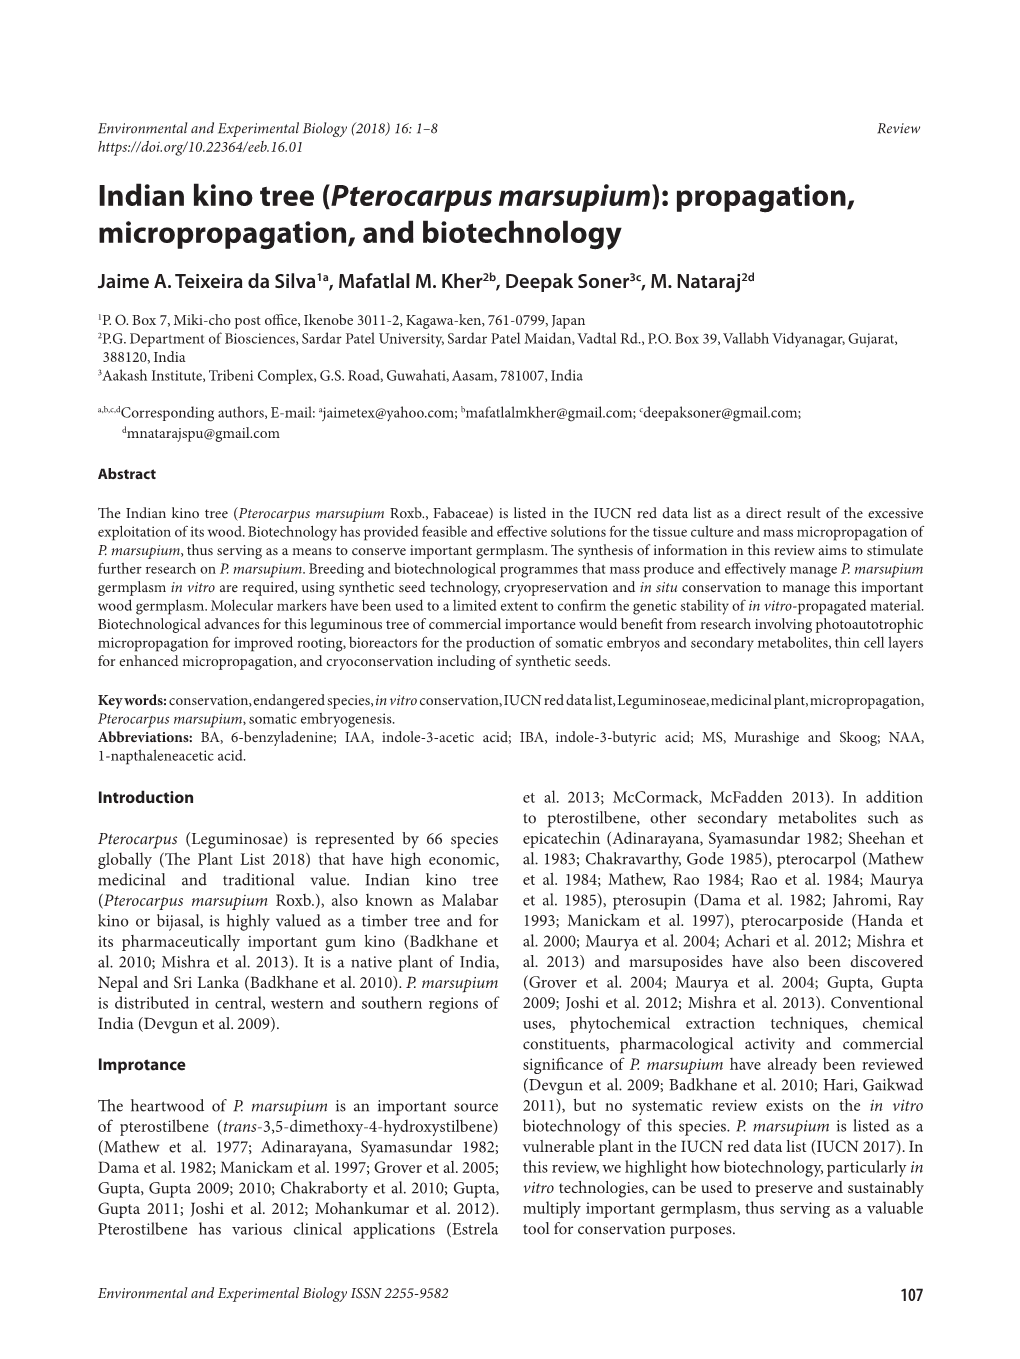 Indian Kino Tree (Pterocarpus Marsupium): Propagation, Micropropagation, and Biotechnology